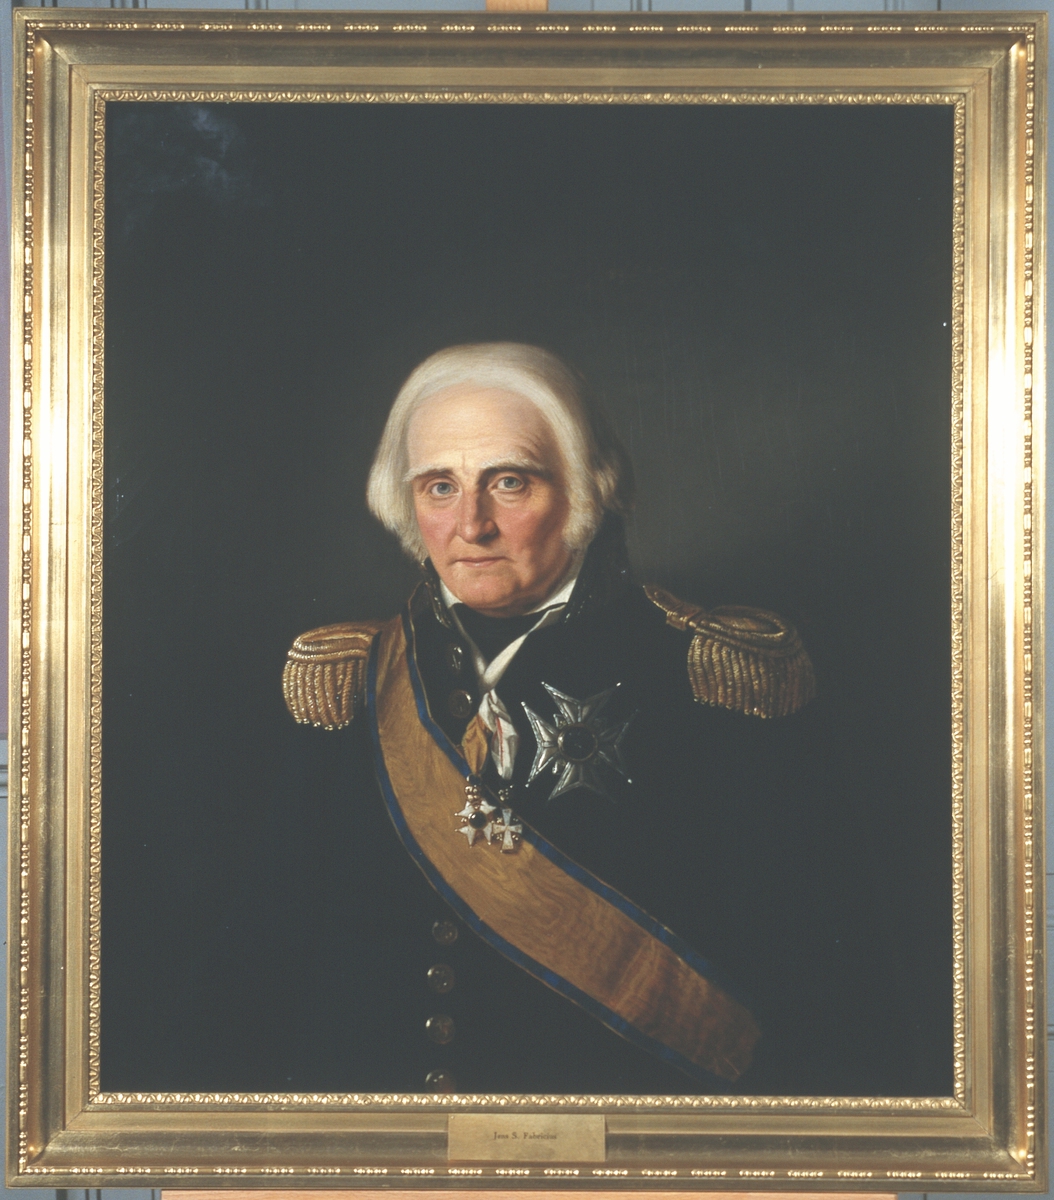 Portrett av Jens S. Fabricius. Mørk uniform, admiralsuniform. En orden festet på uniformen og to i bånd rundt halsen.